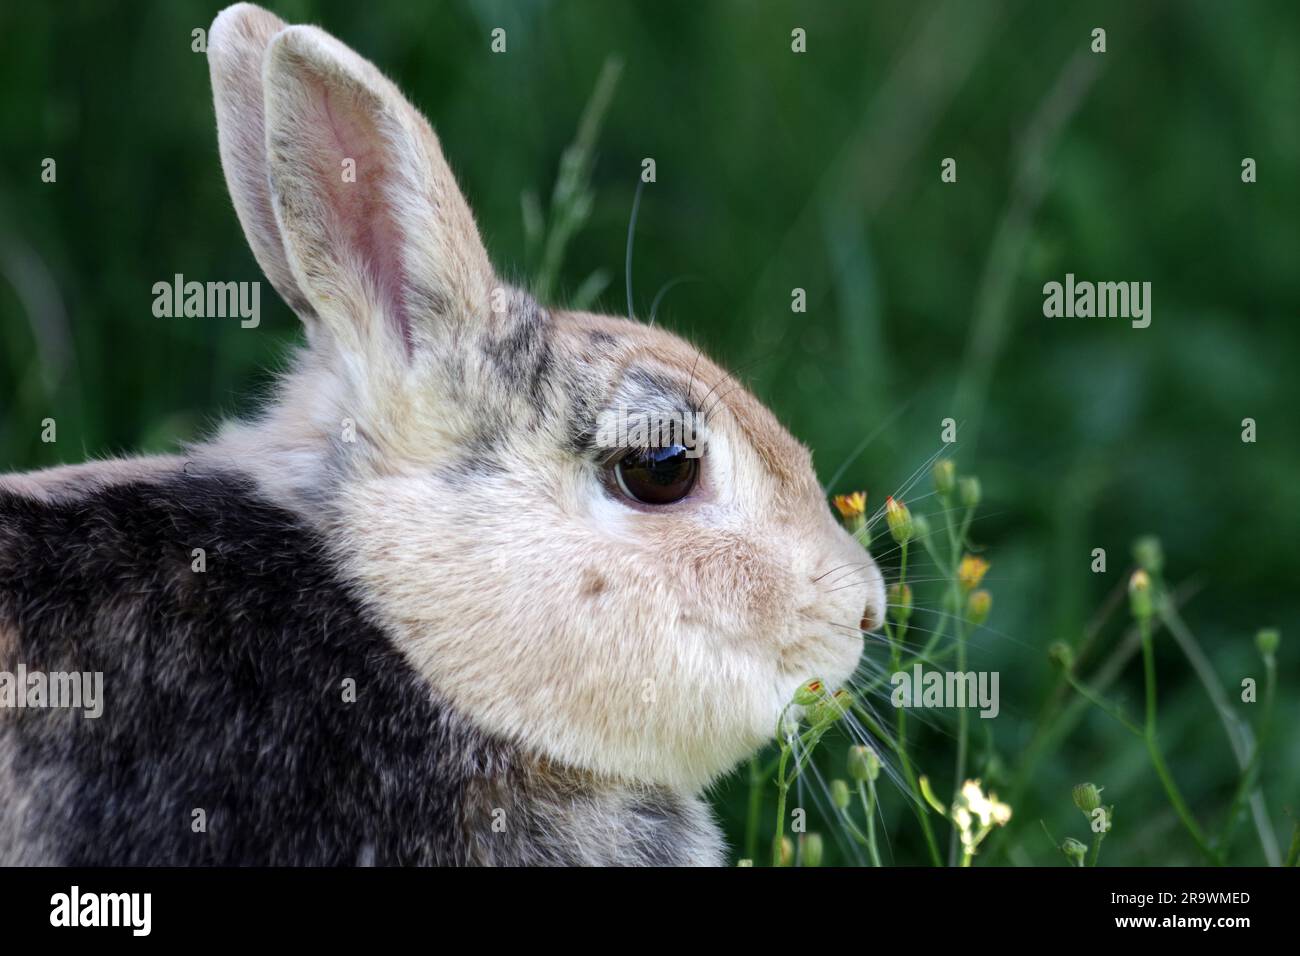 Close-up, domestic rabbit (Oryctolagus cuniculus forma domestica), rabbit, head, grass, garden, side profile view of domestic rabbit in grass Stock Photo